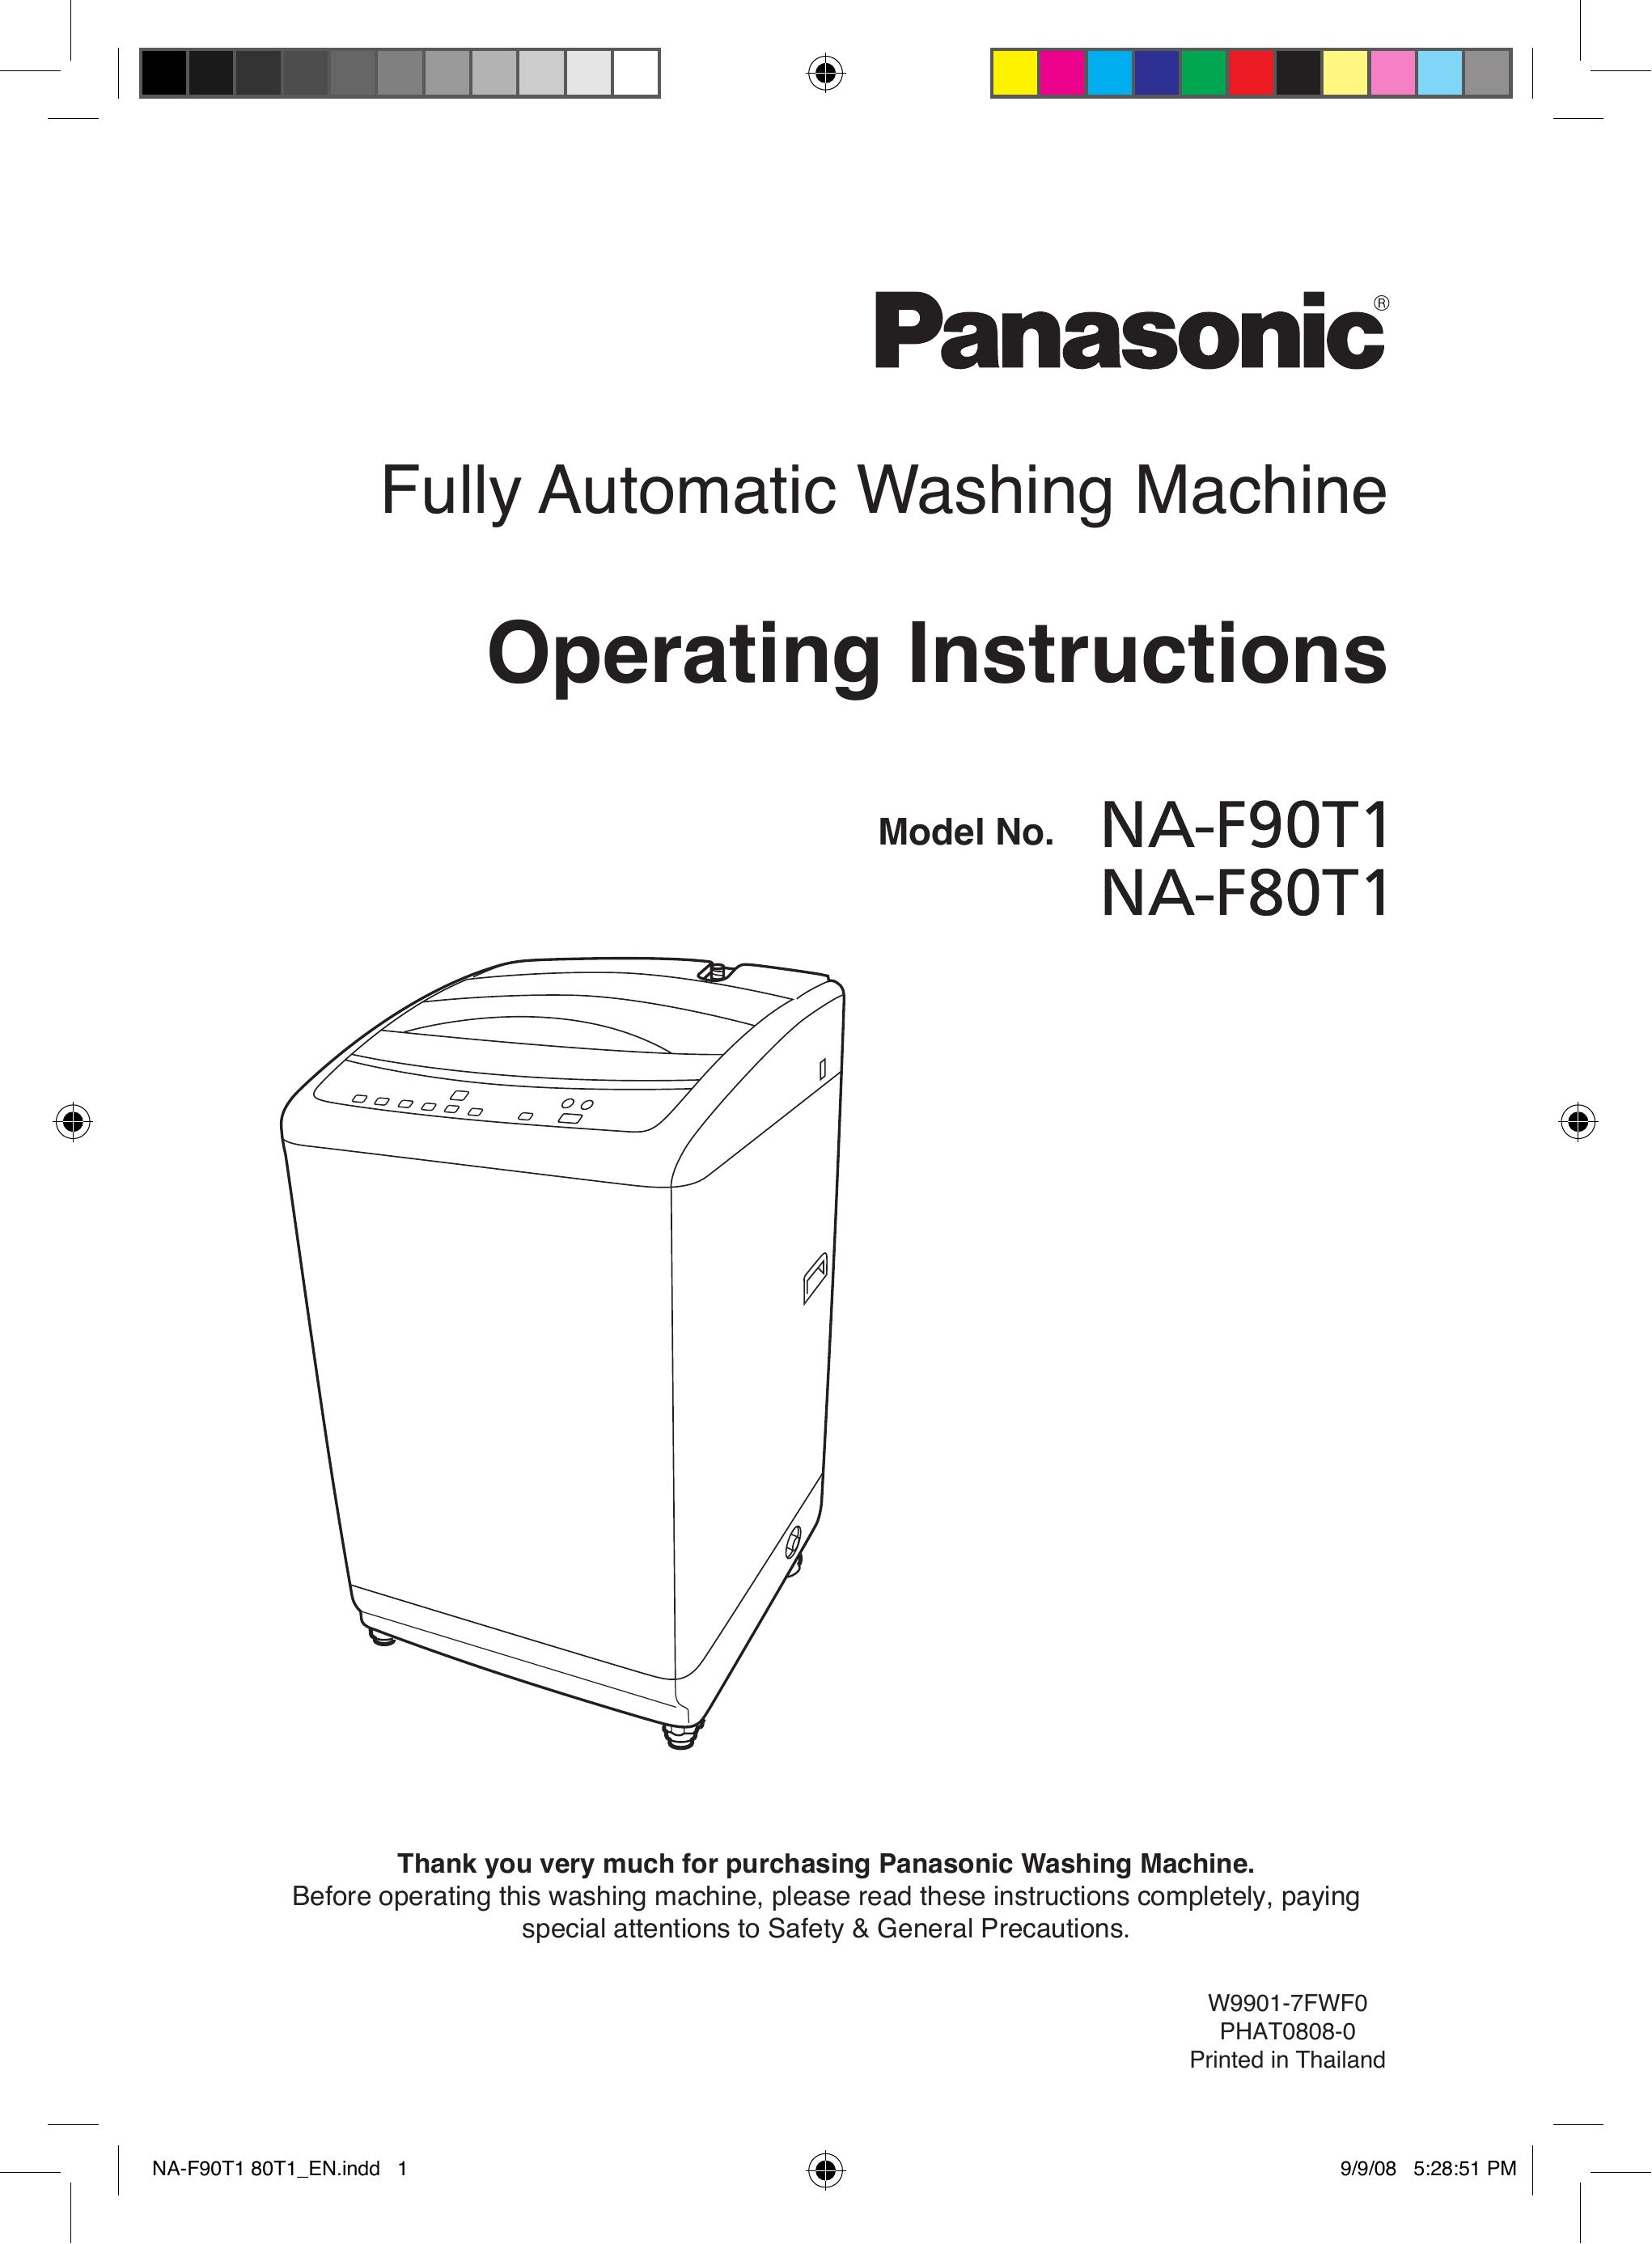 Panasonic NA-F80T1 Washer User Manual